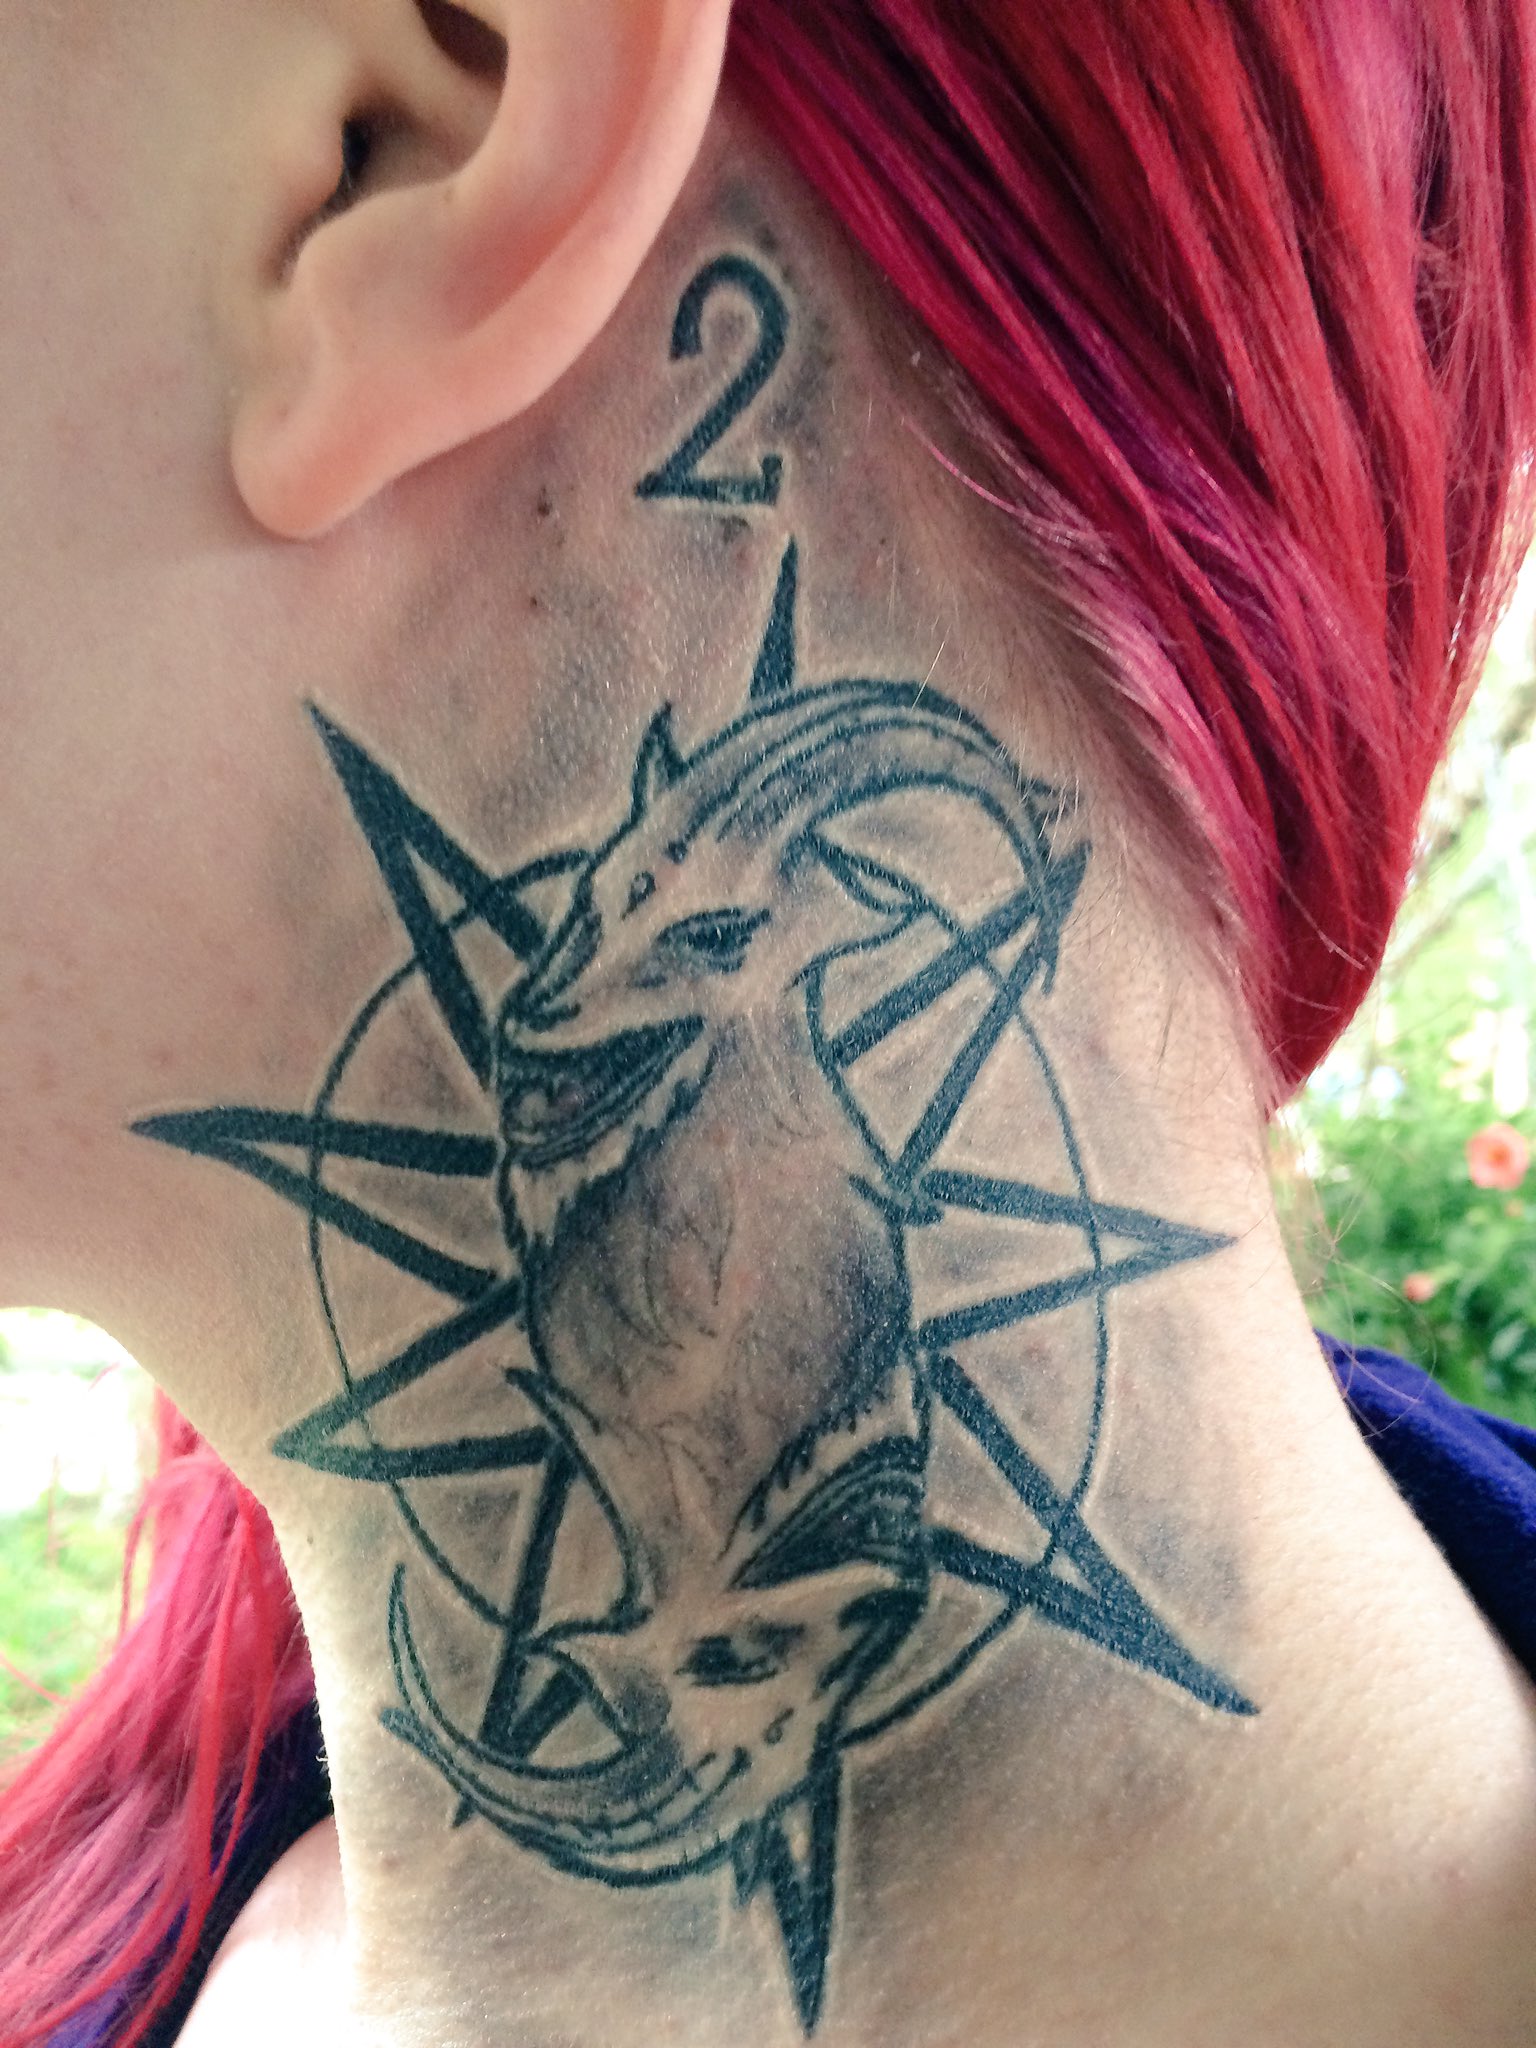 Slipknot Temporary Tattoo Sticker  OhMyTat